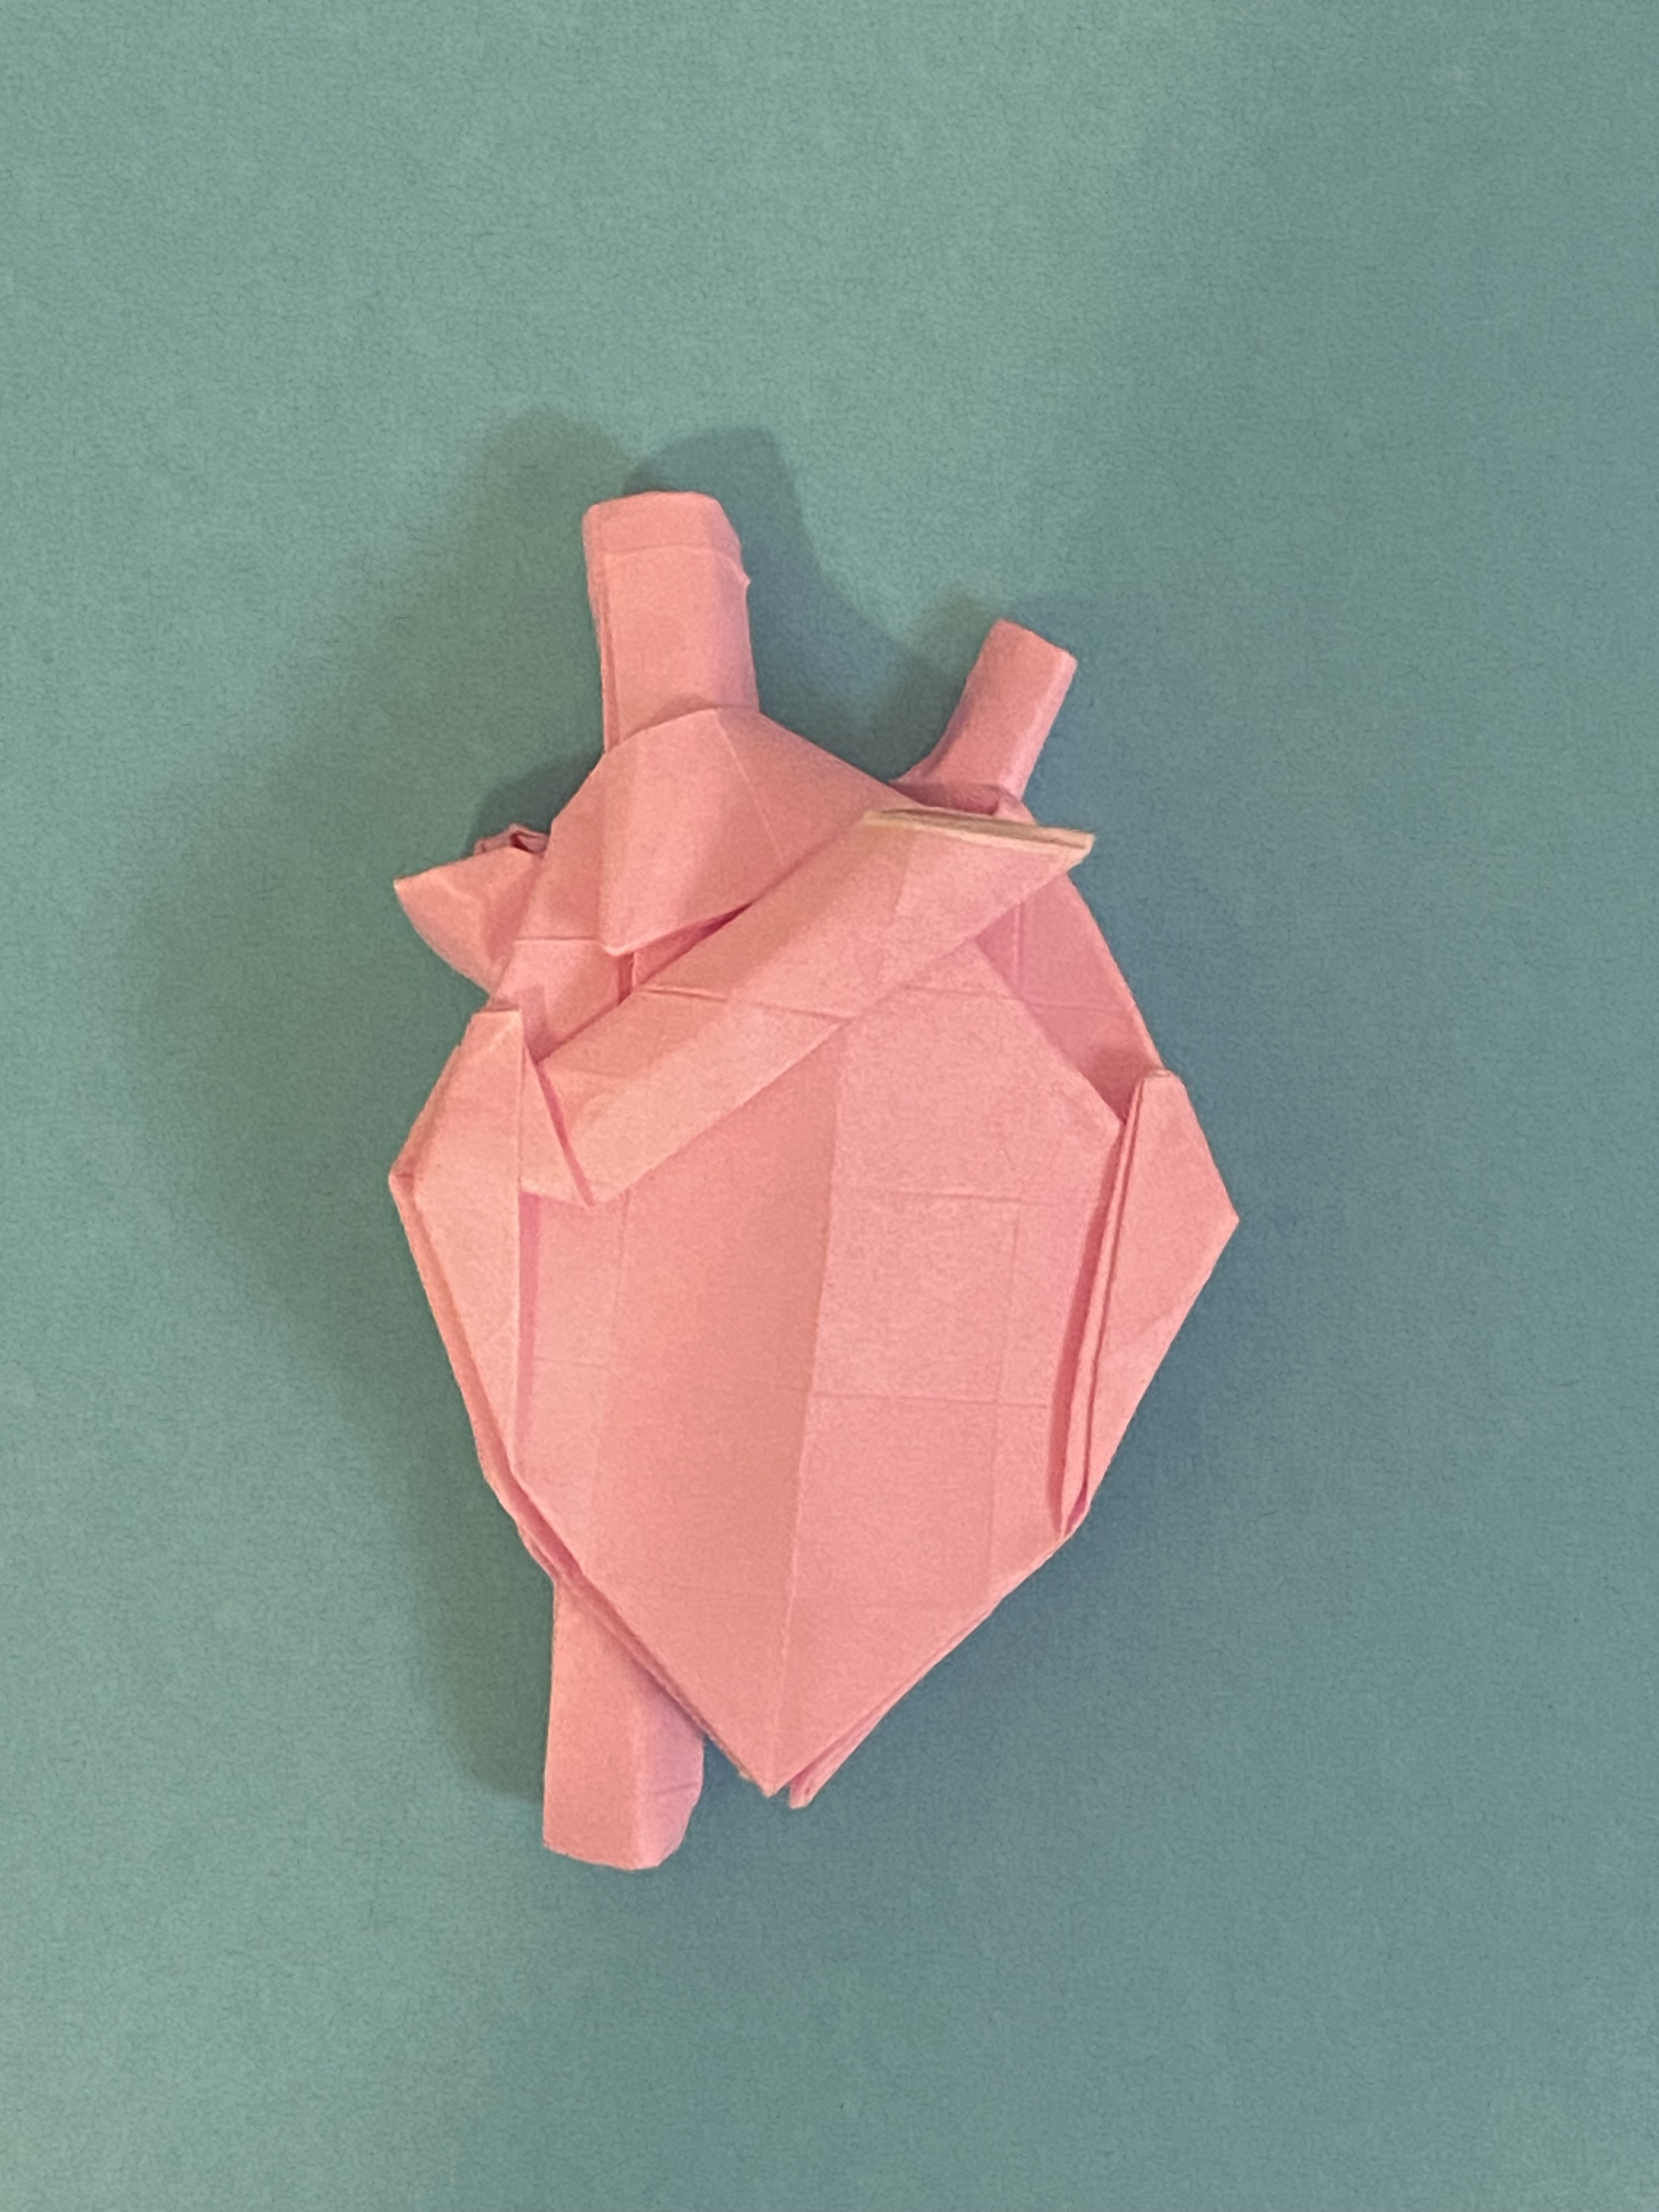 An origami anatomical heart, designed by Ronik Bhaskar.